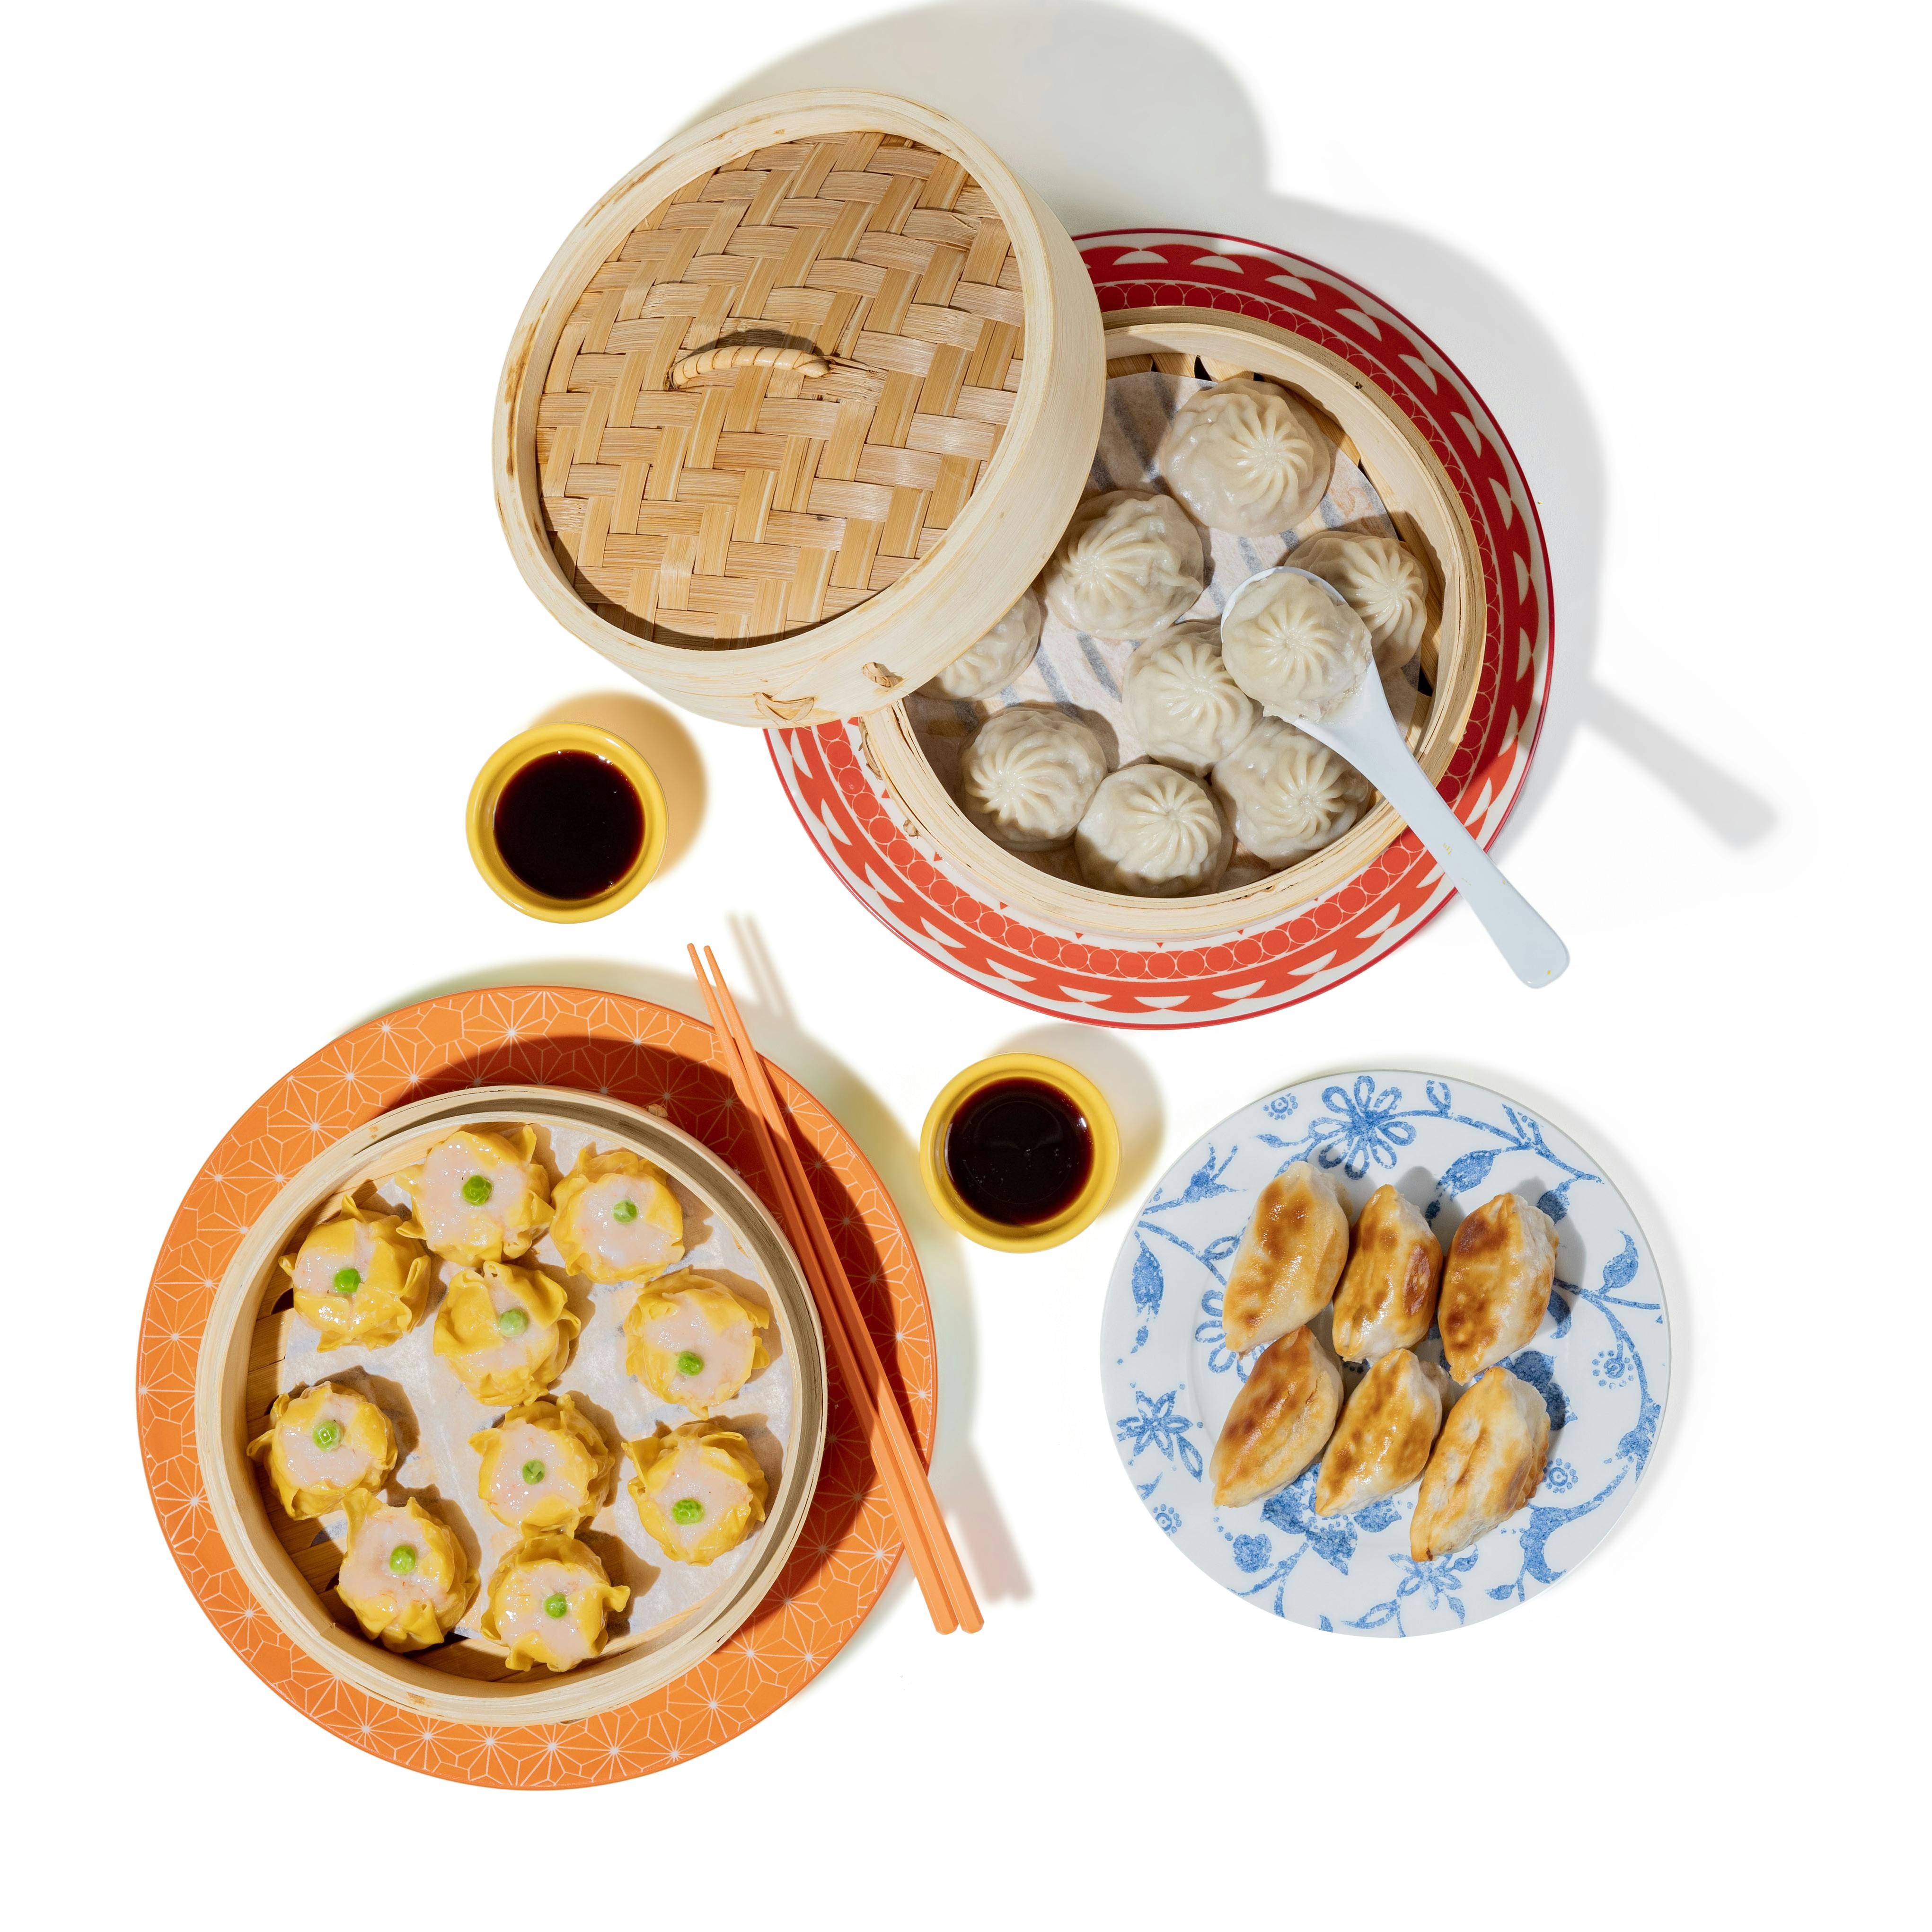 Dumplings & Siu Mai - Choose Your Own 3 Pack